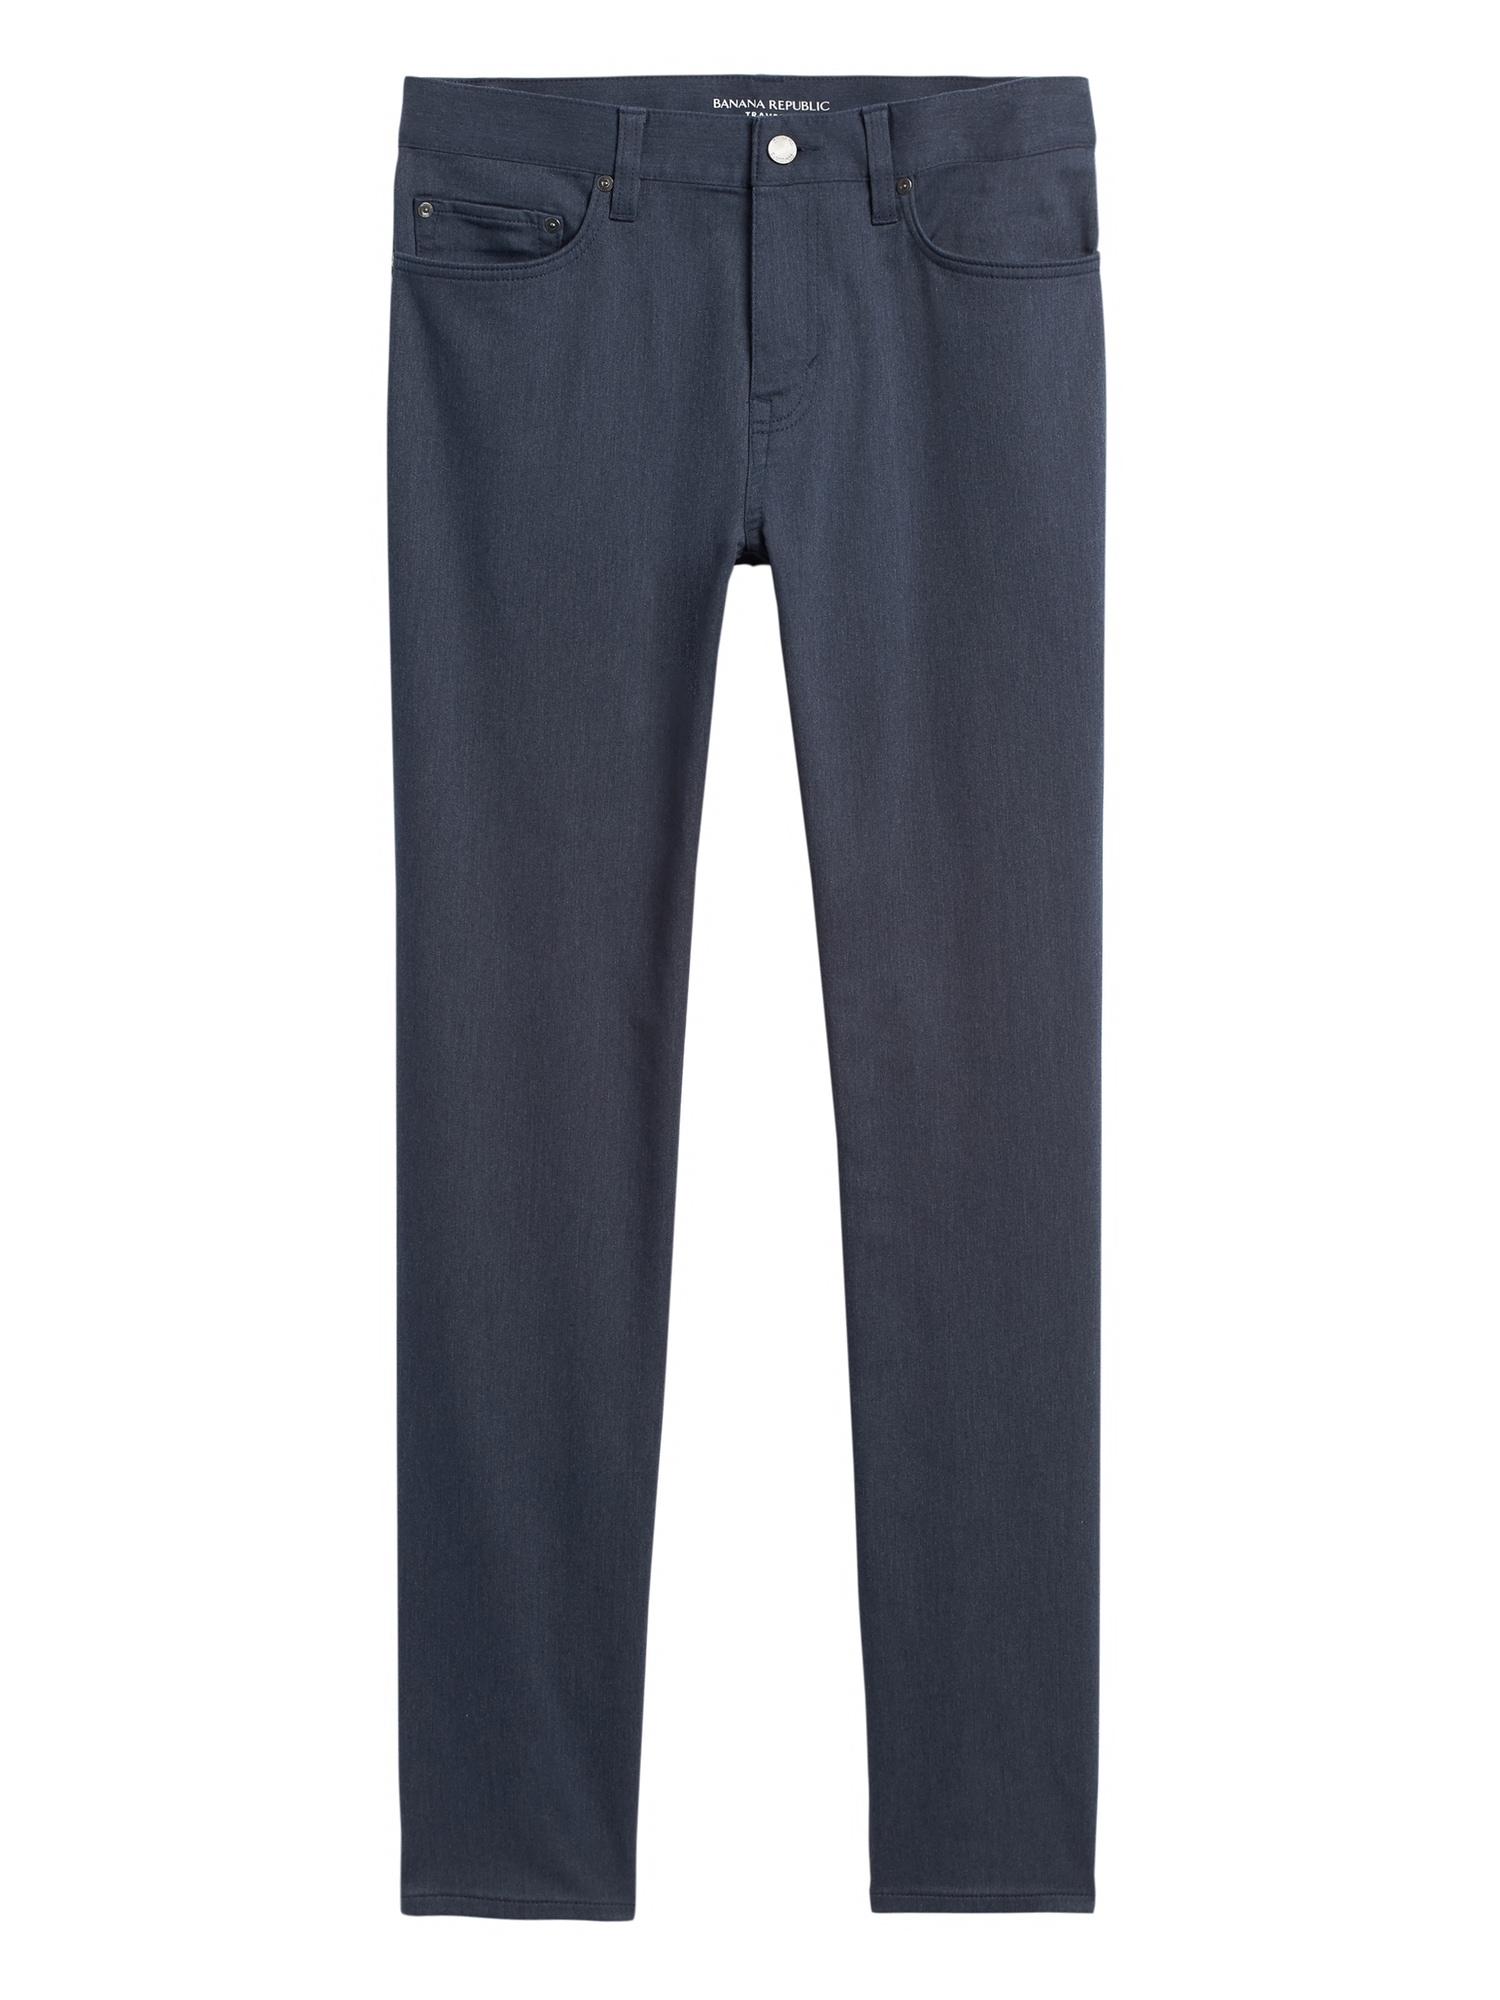 NWT BANANA REPUBLIC Men's TRAVELER Slim Fit Pants Navy Blue sz.36Wx36L  488420-00